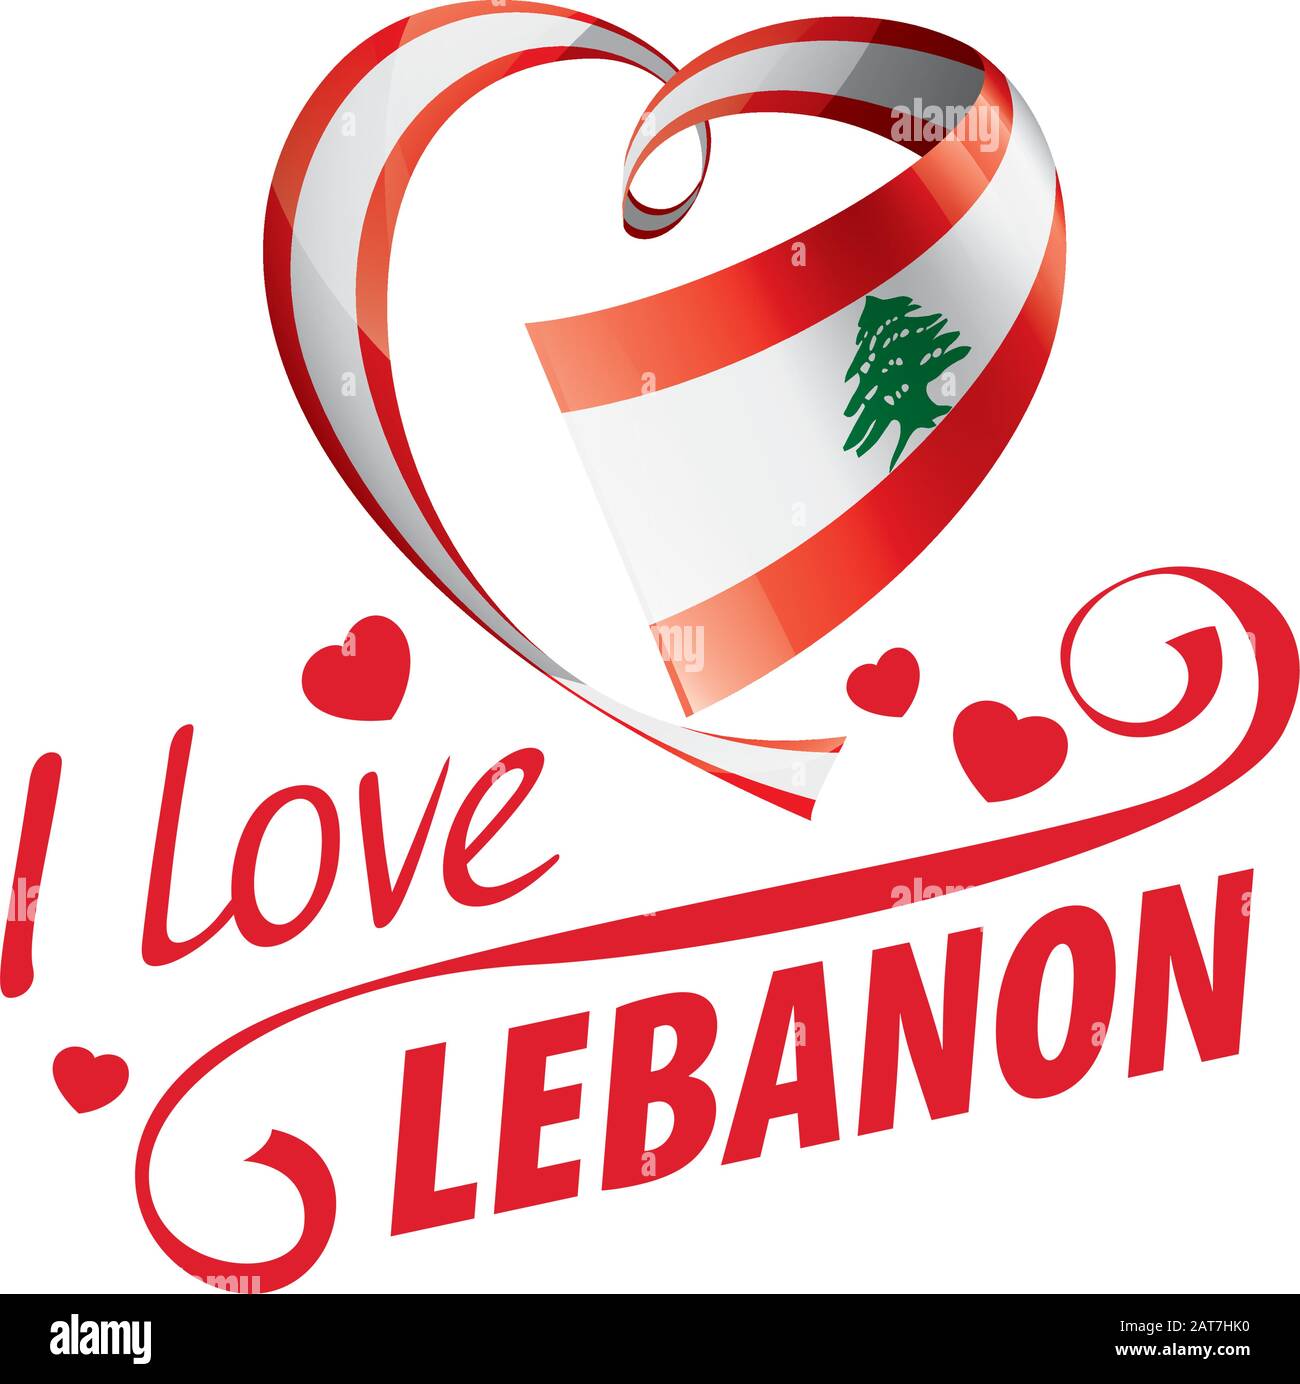 About - Lebanon